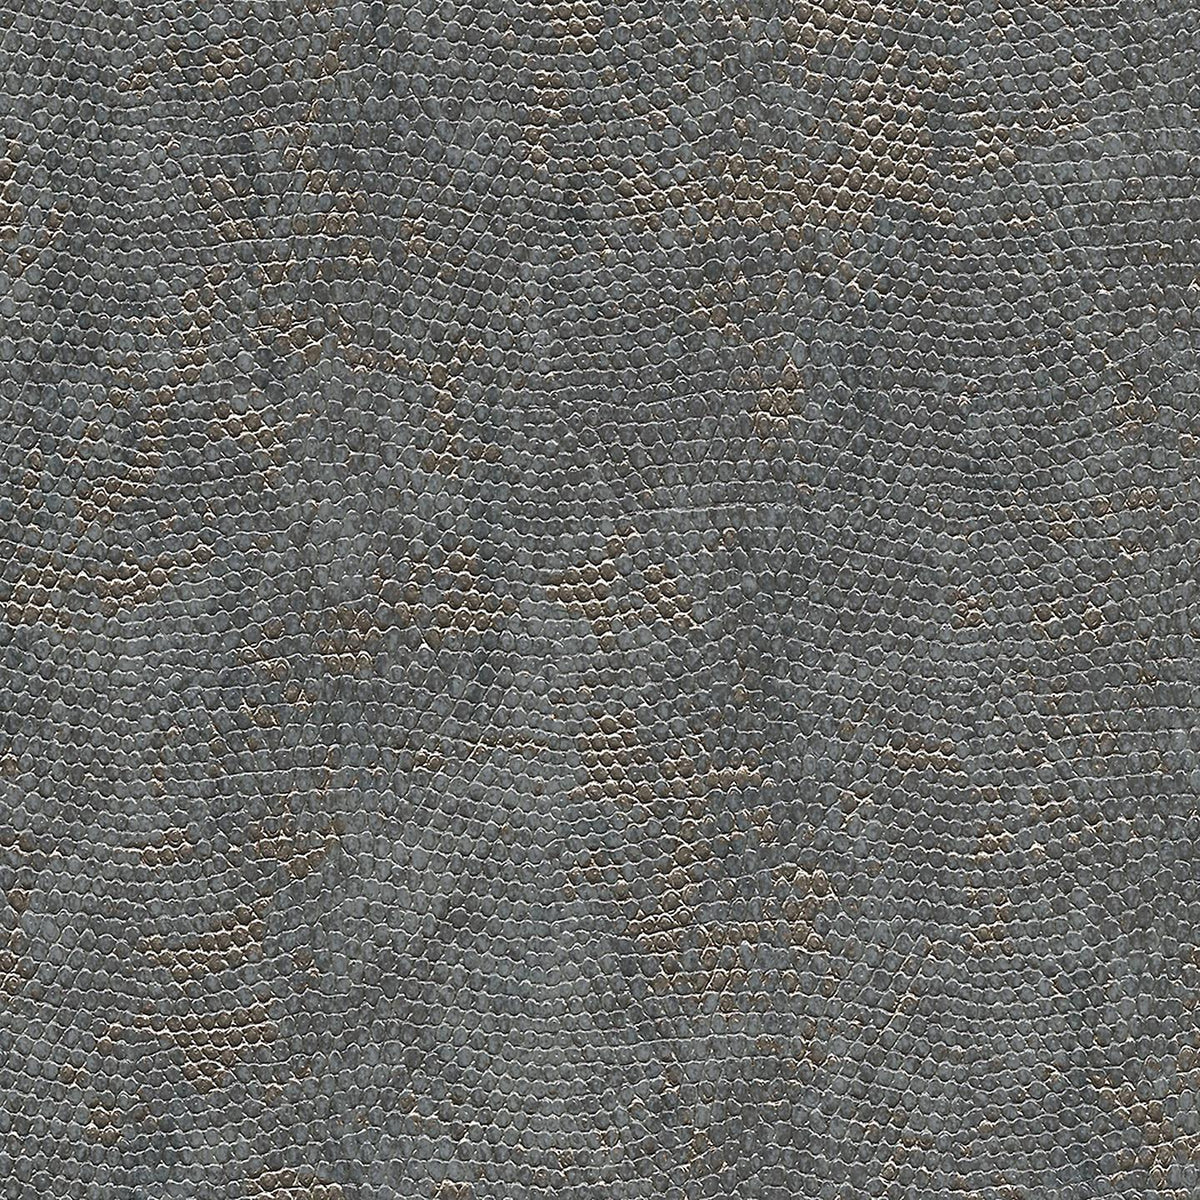 Moon Snake Rhinestone Fabric - Charcoal – Counterpart Studios